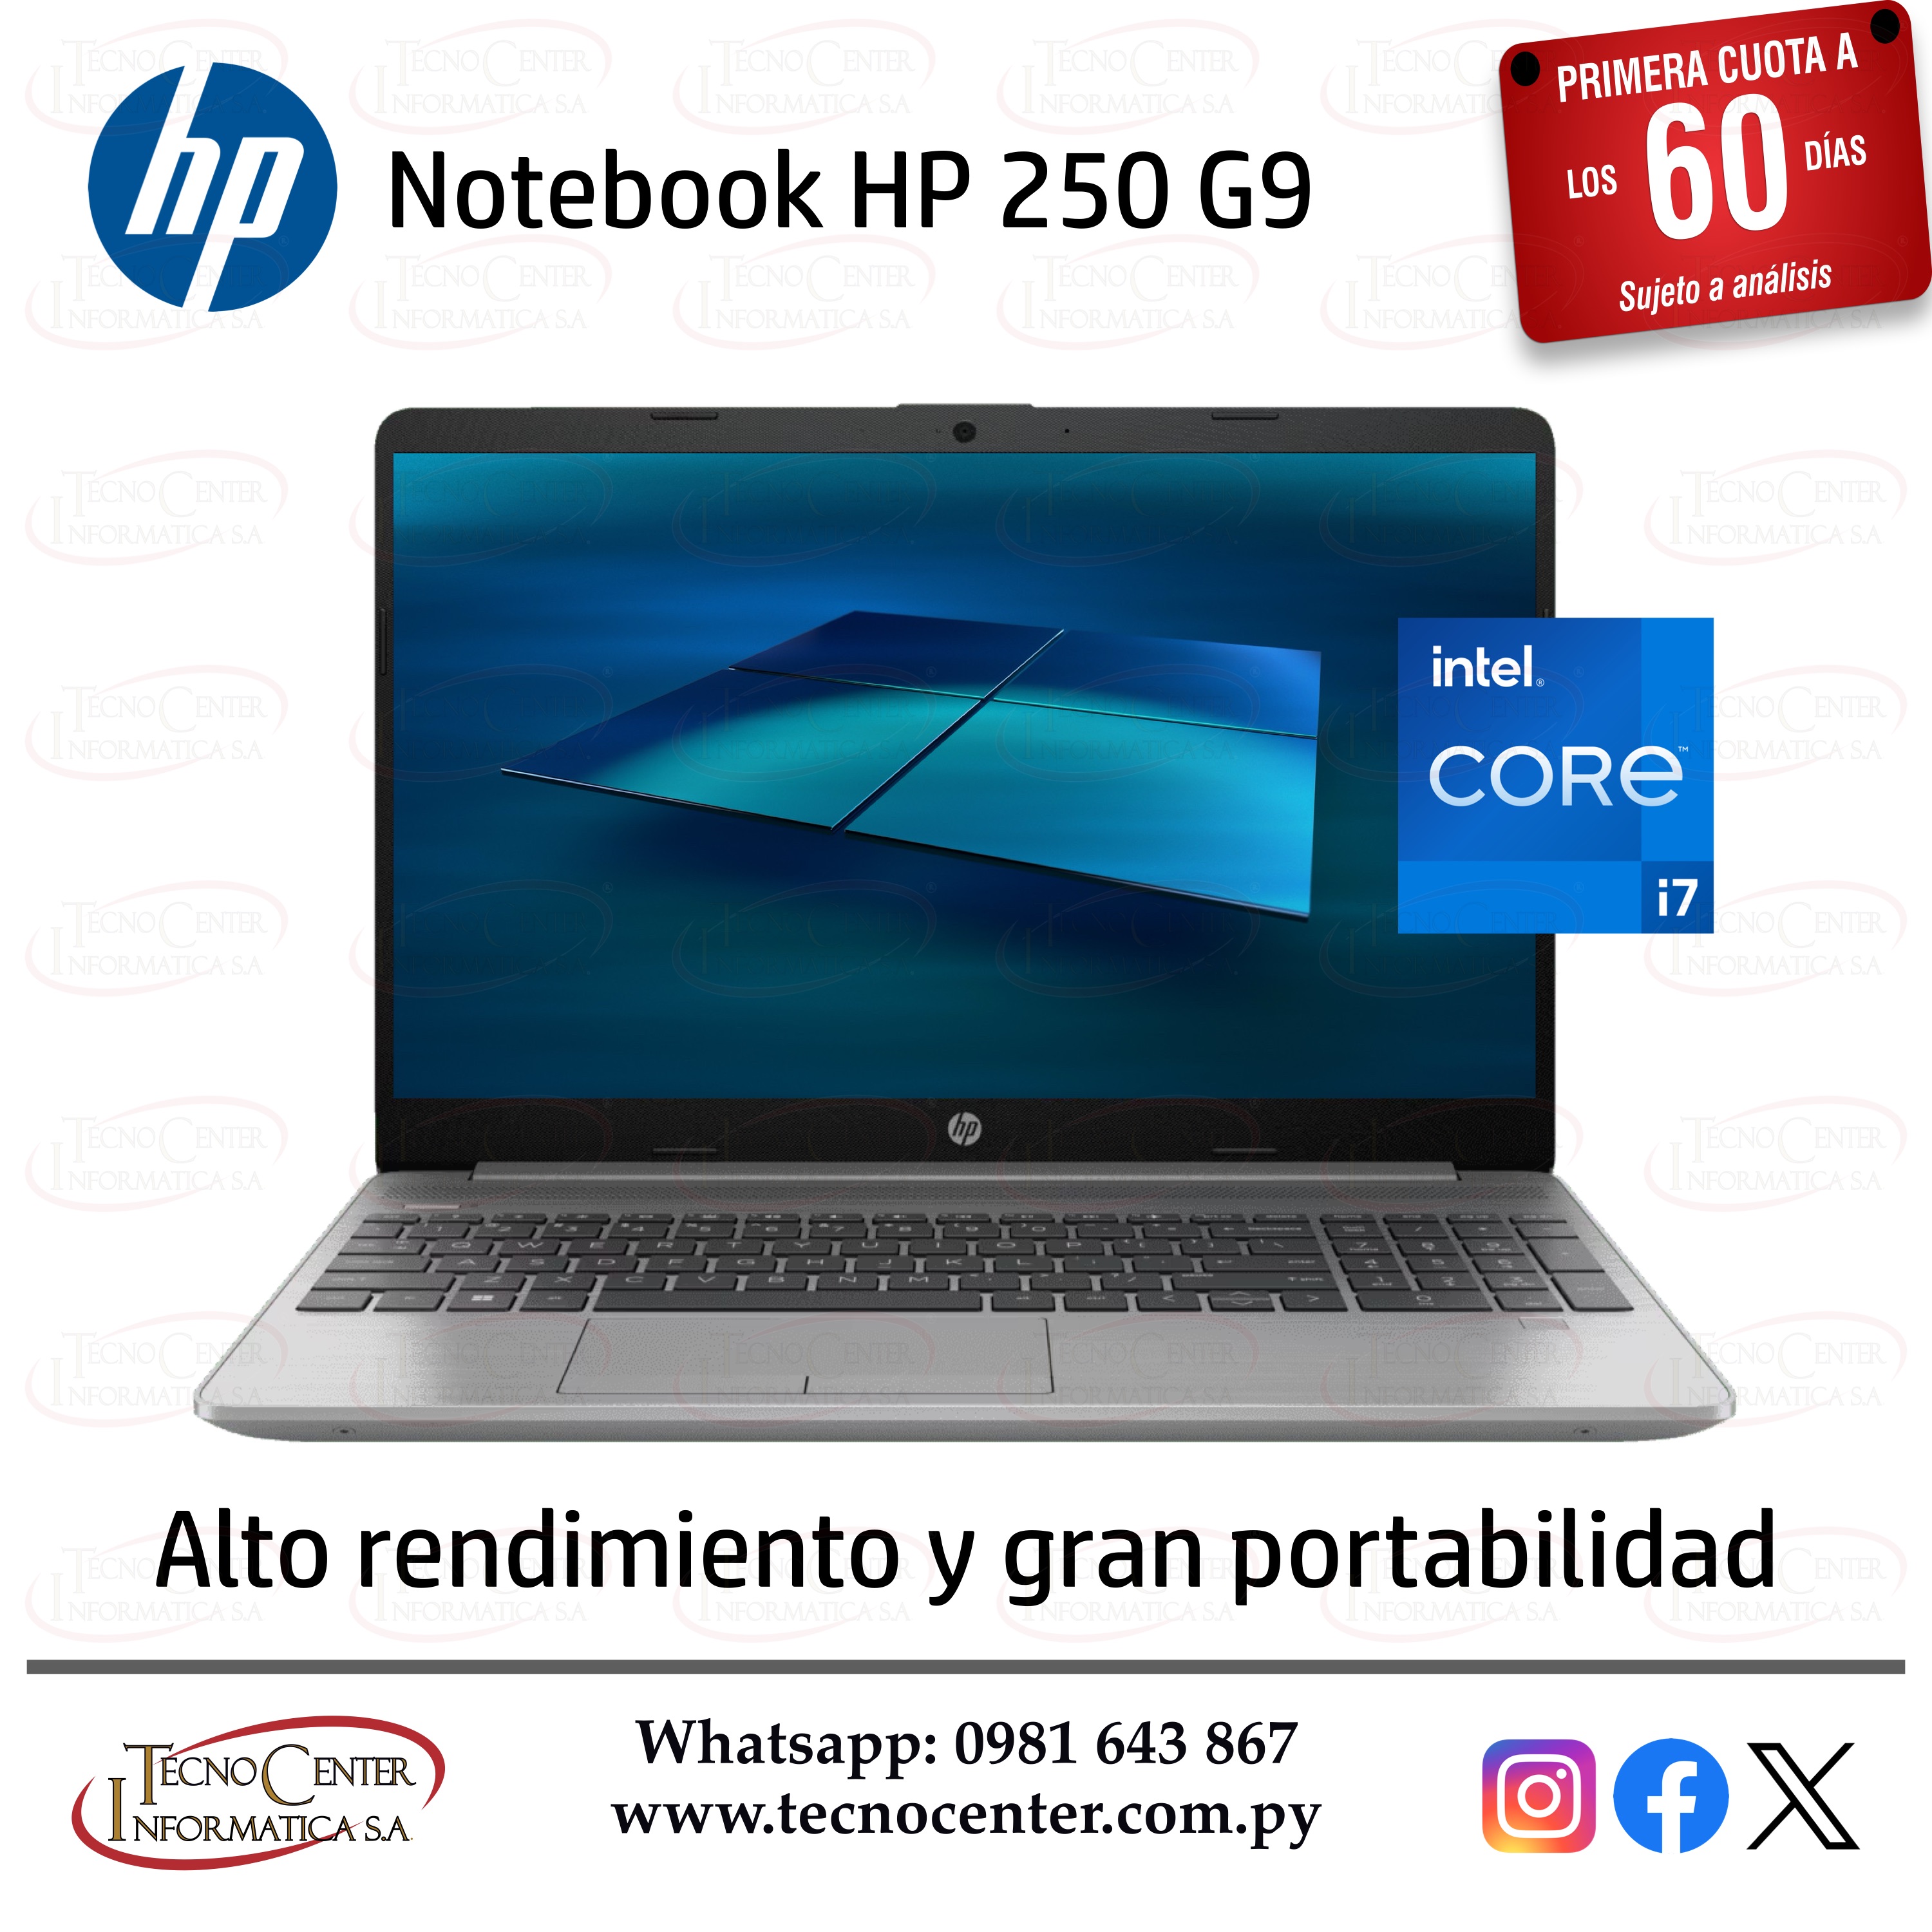 Notebook HP 250 G9 Intel Core i7